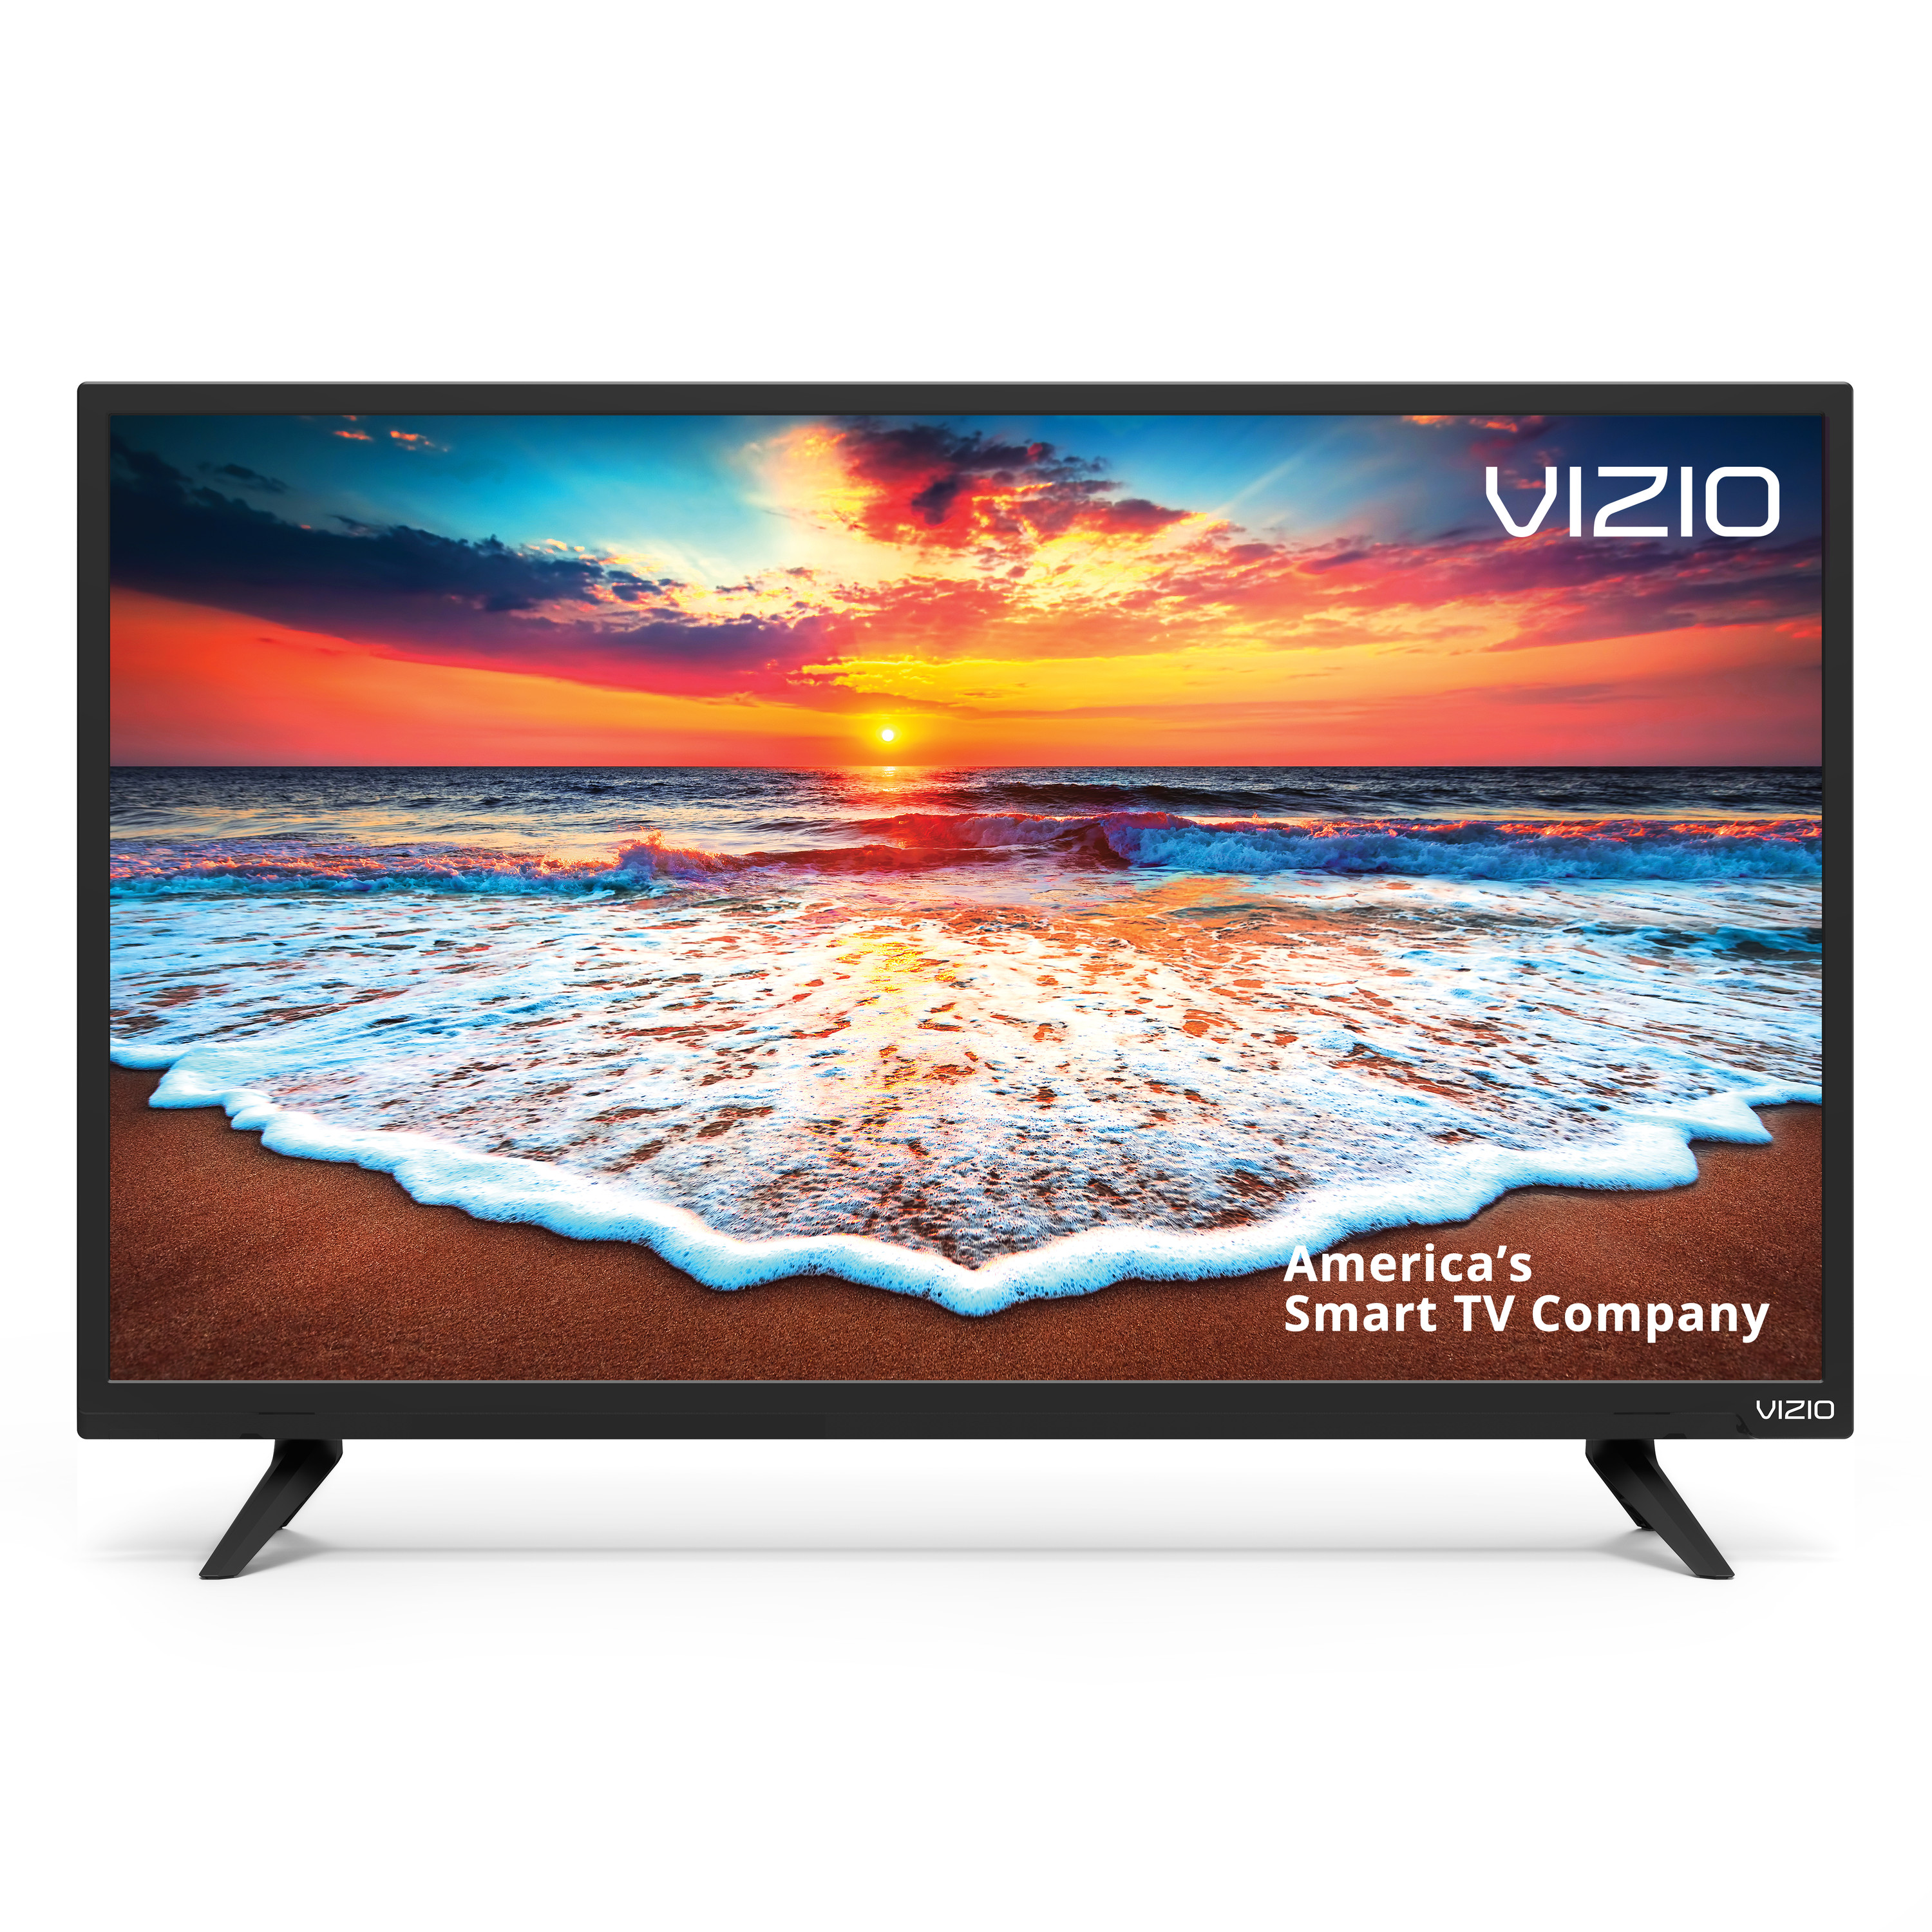 VIZIO 32" Class HD LED Smart TV D-Series D32h-F1 - image 1 of 12